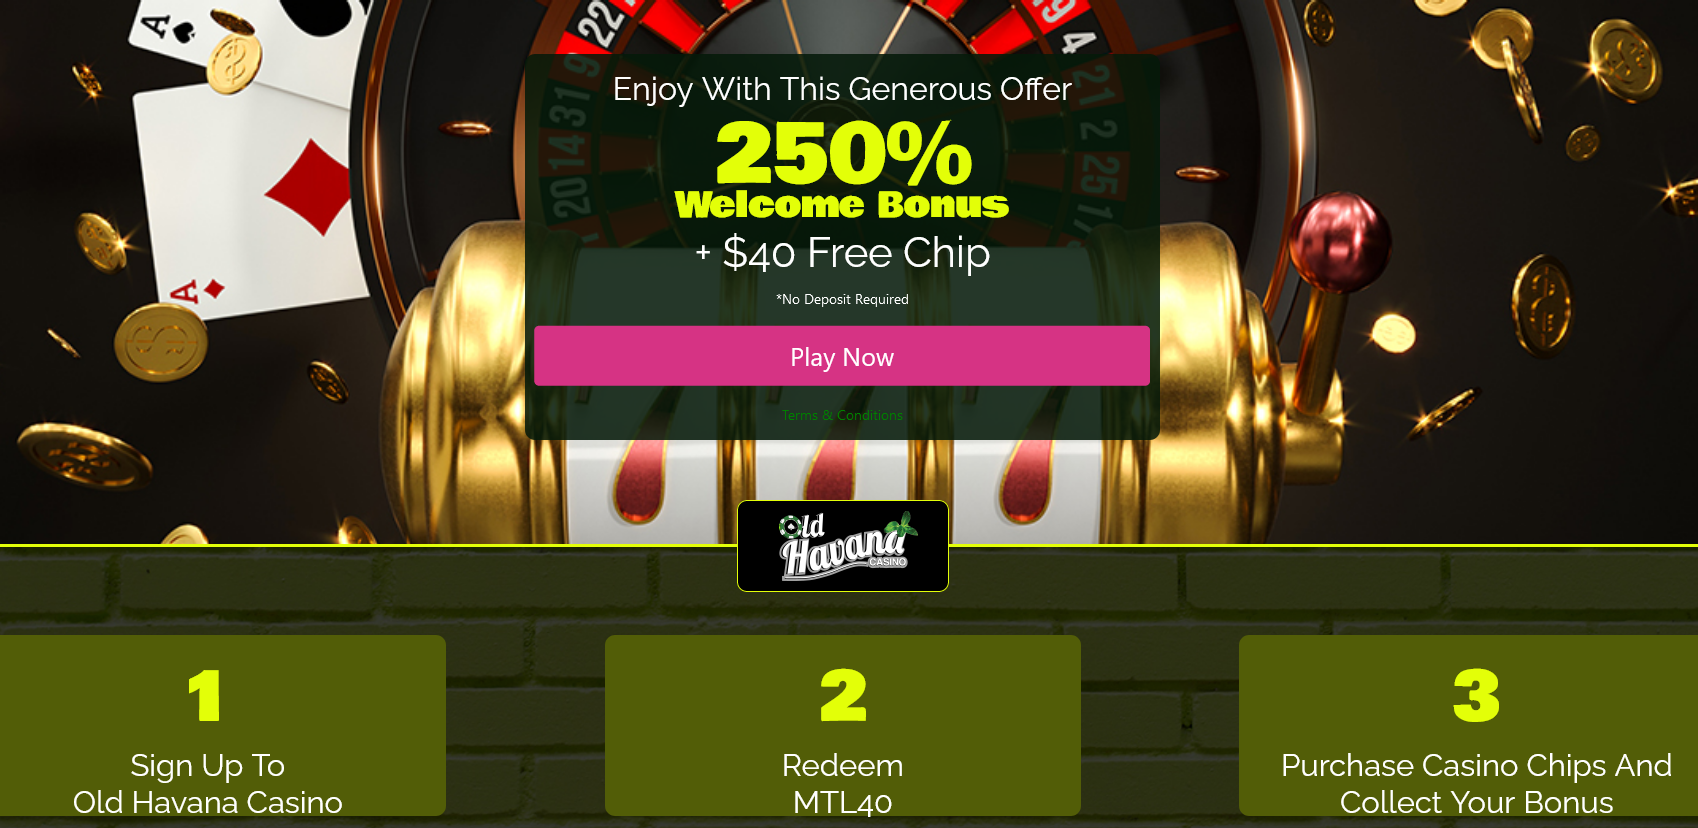 Old Havana Casino-250% WELCOME BONUS + $40 FREE CHIP